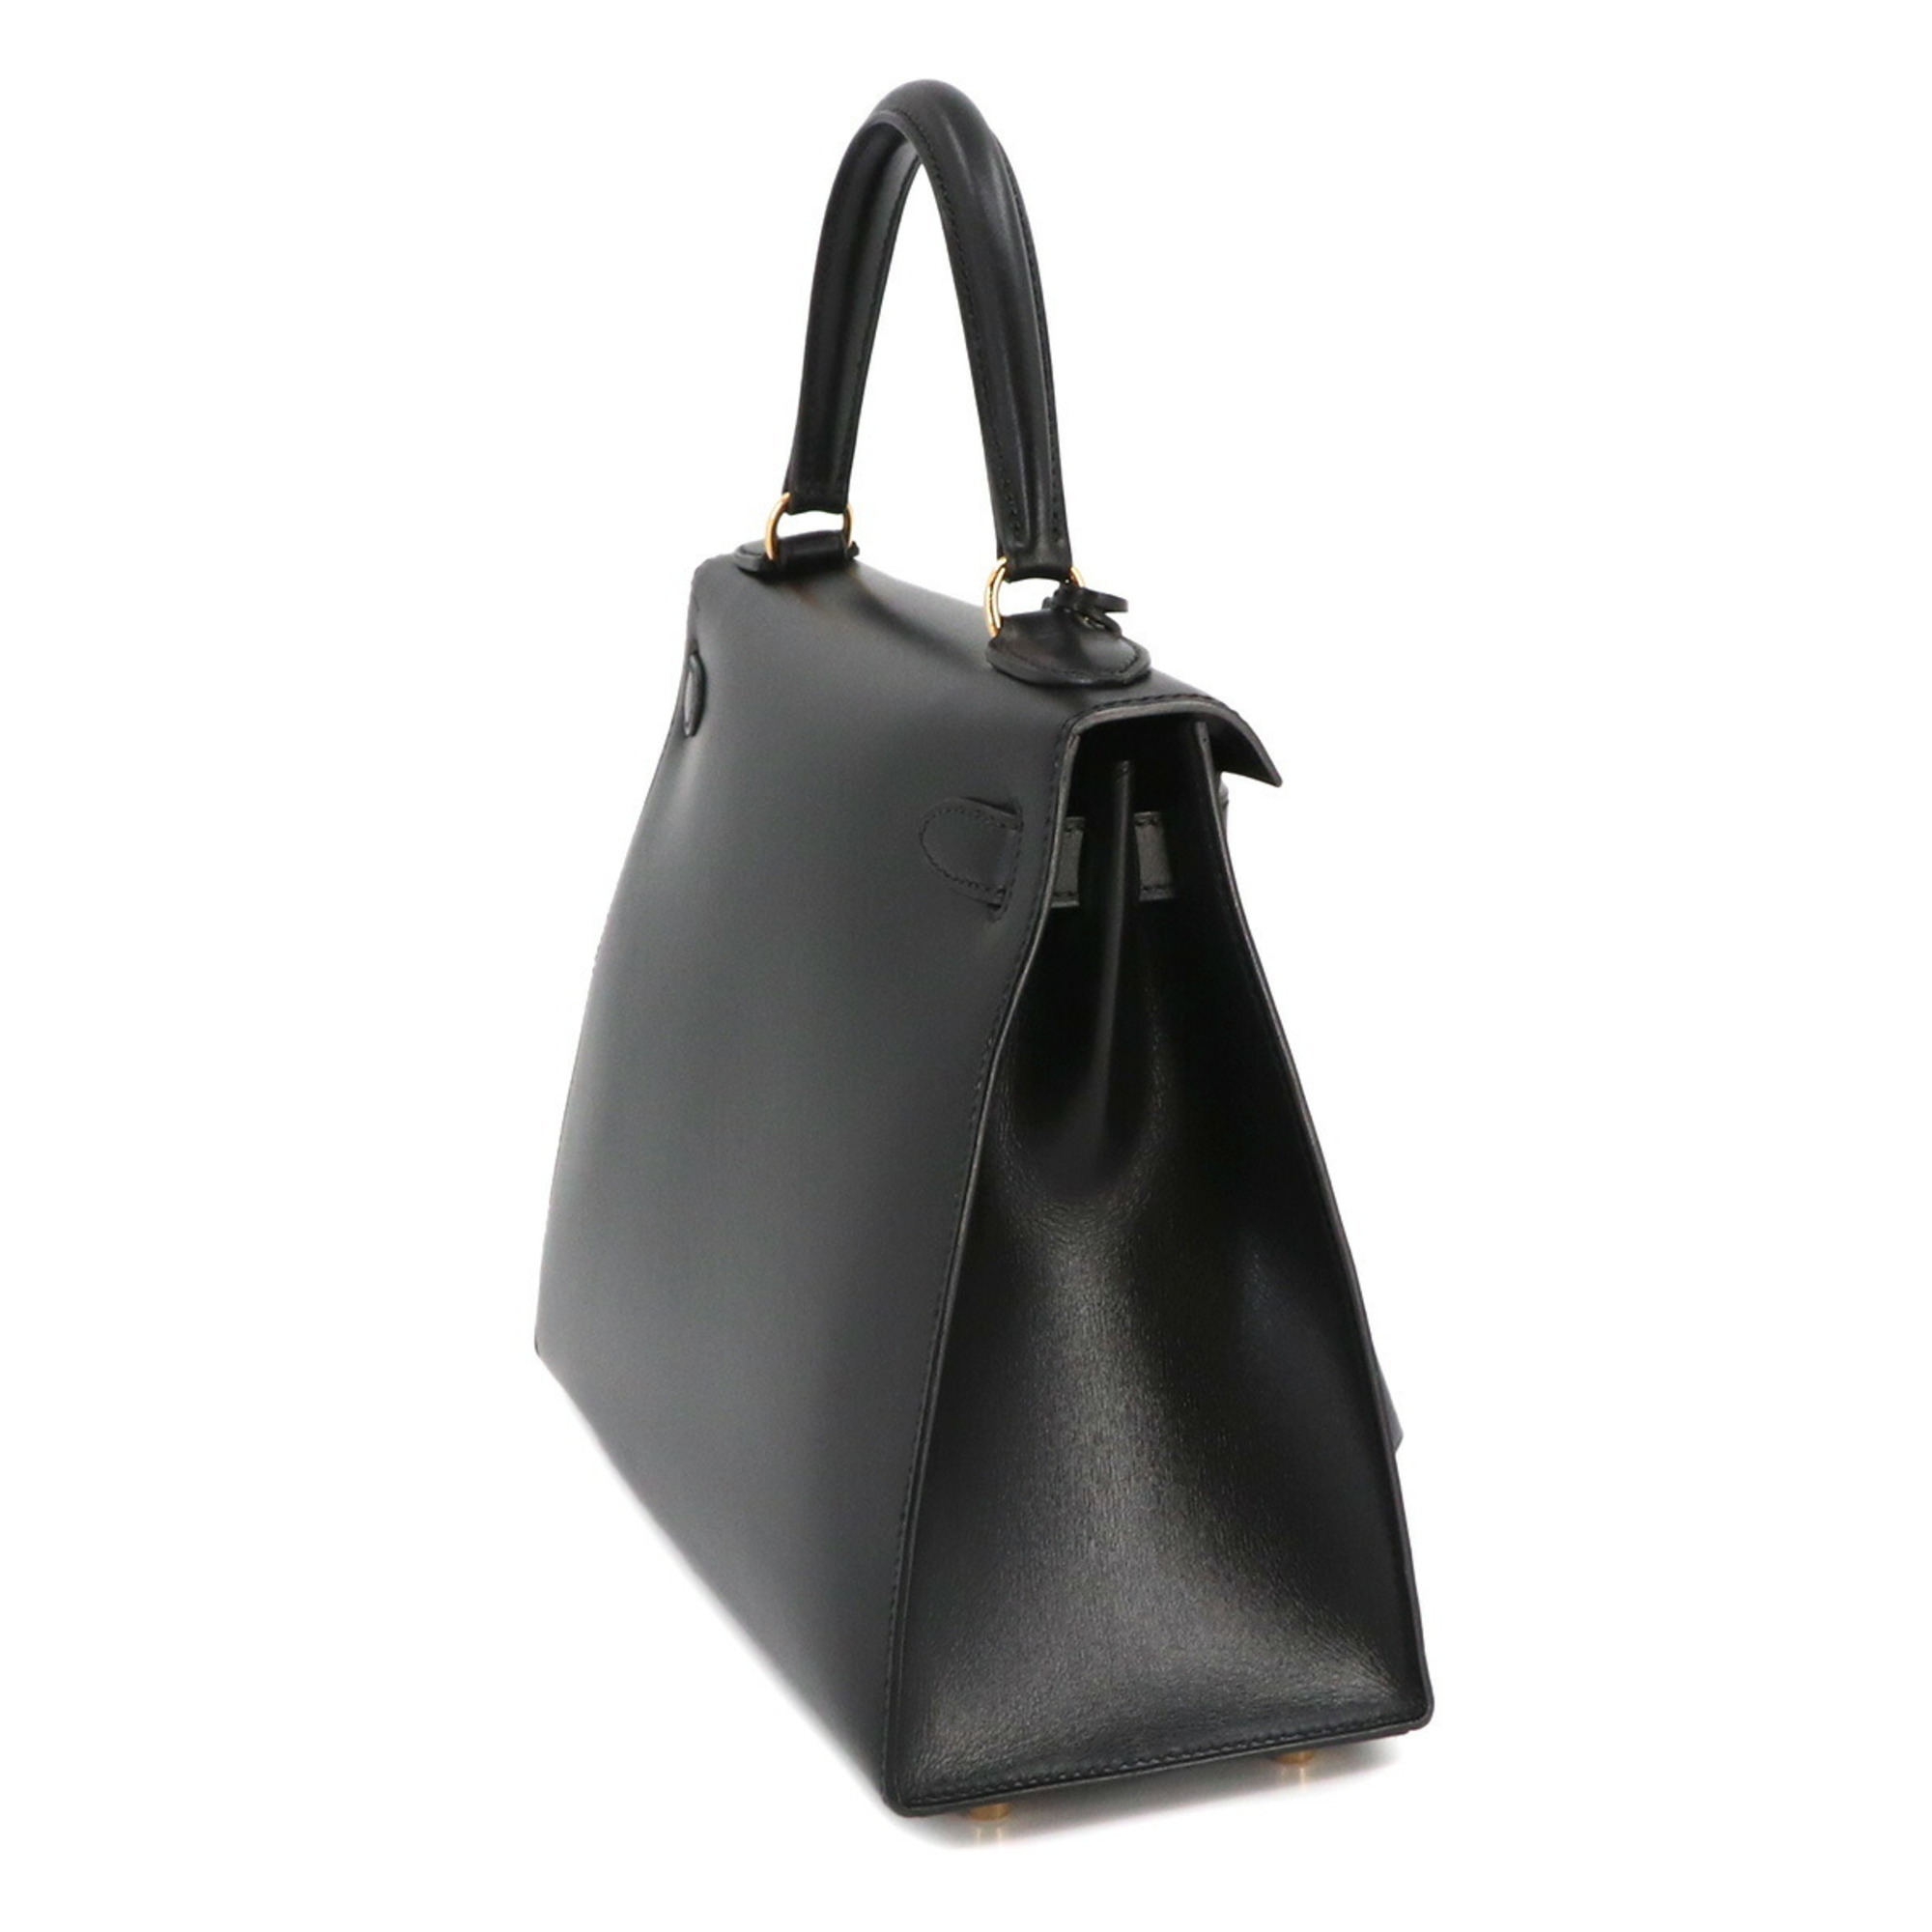 Hermes Kelly 28 2way hand shoulder bag, box calf leather, black, 〇Z engraved, outer stitching, gold hardware,